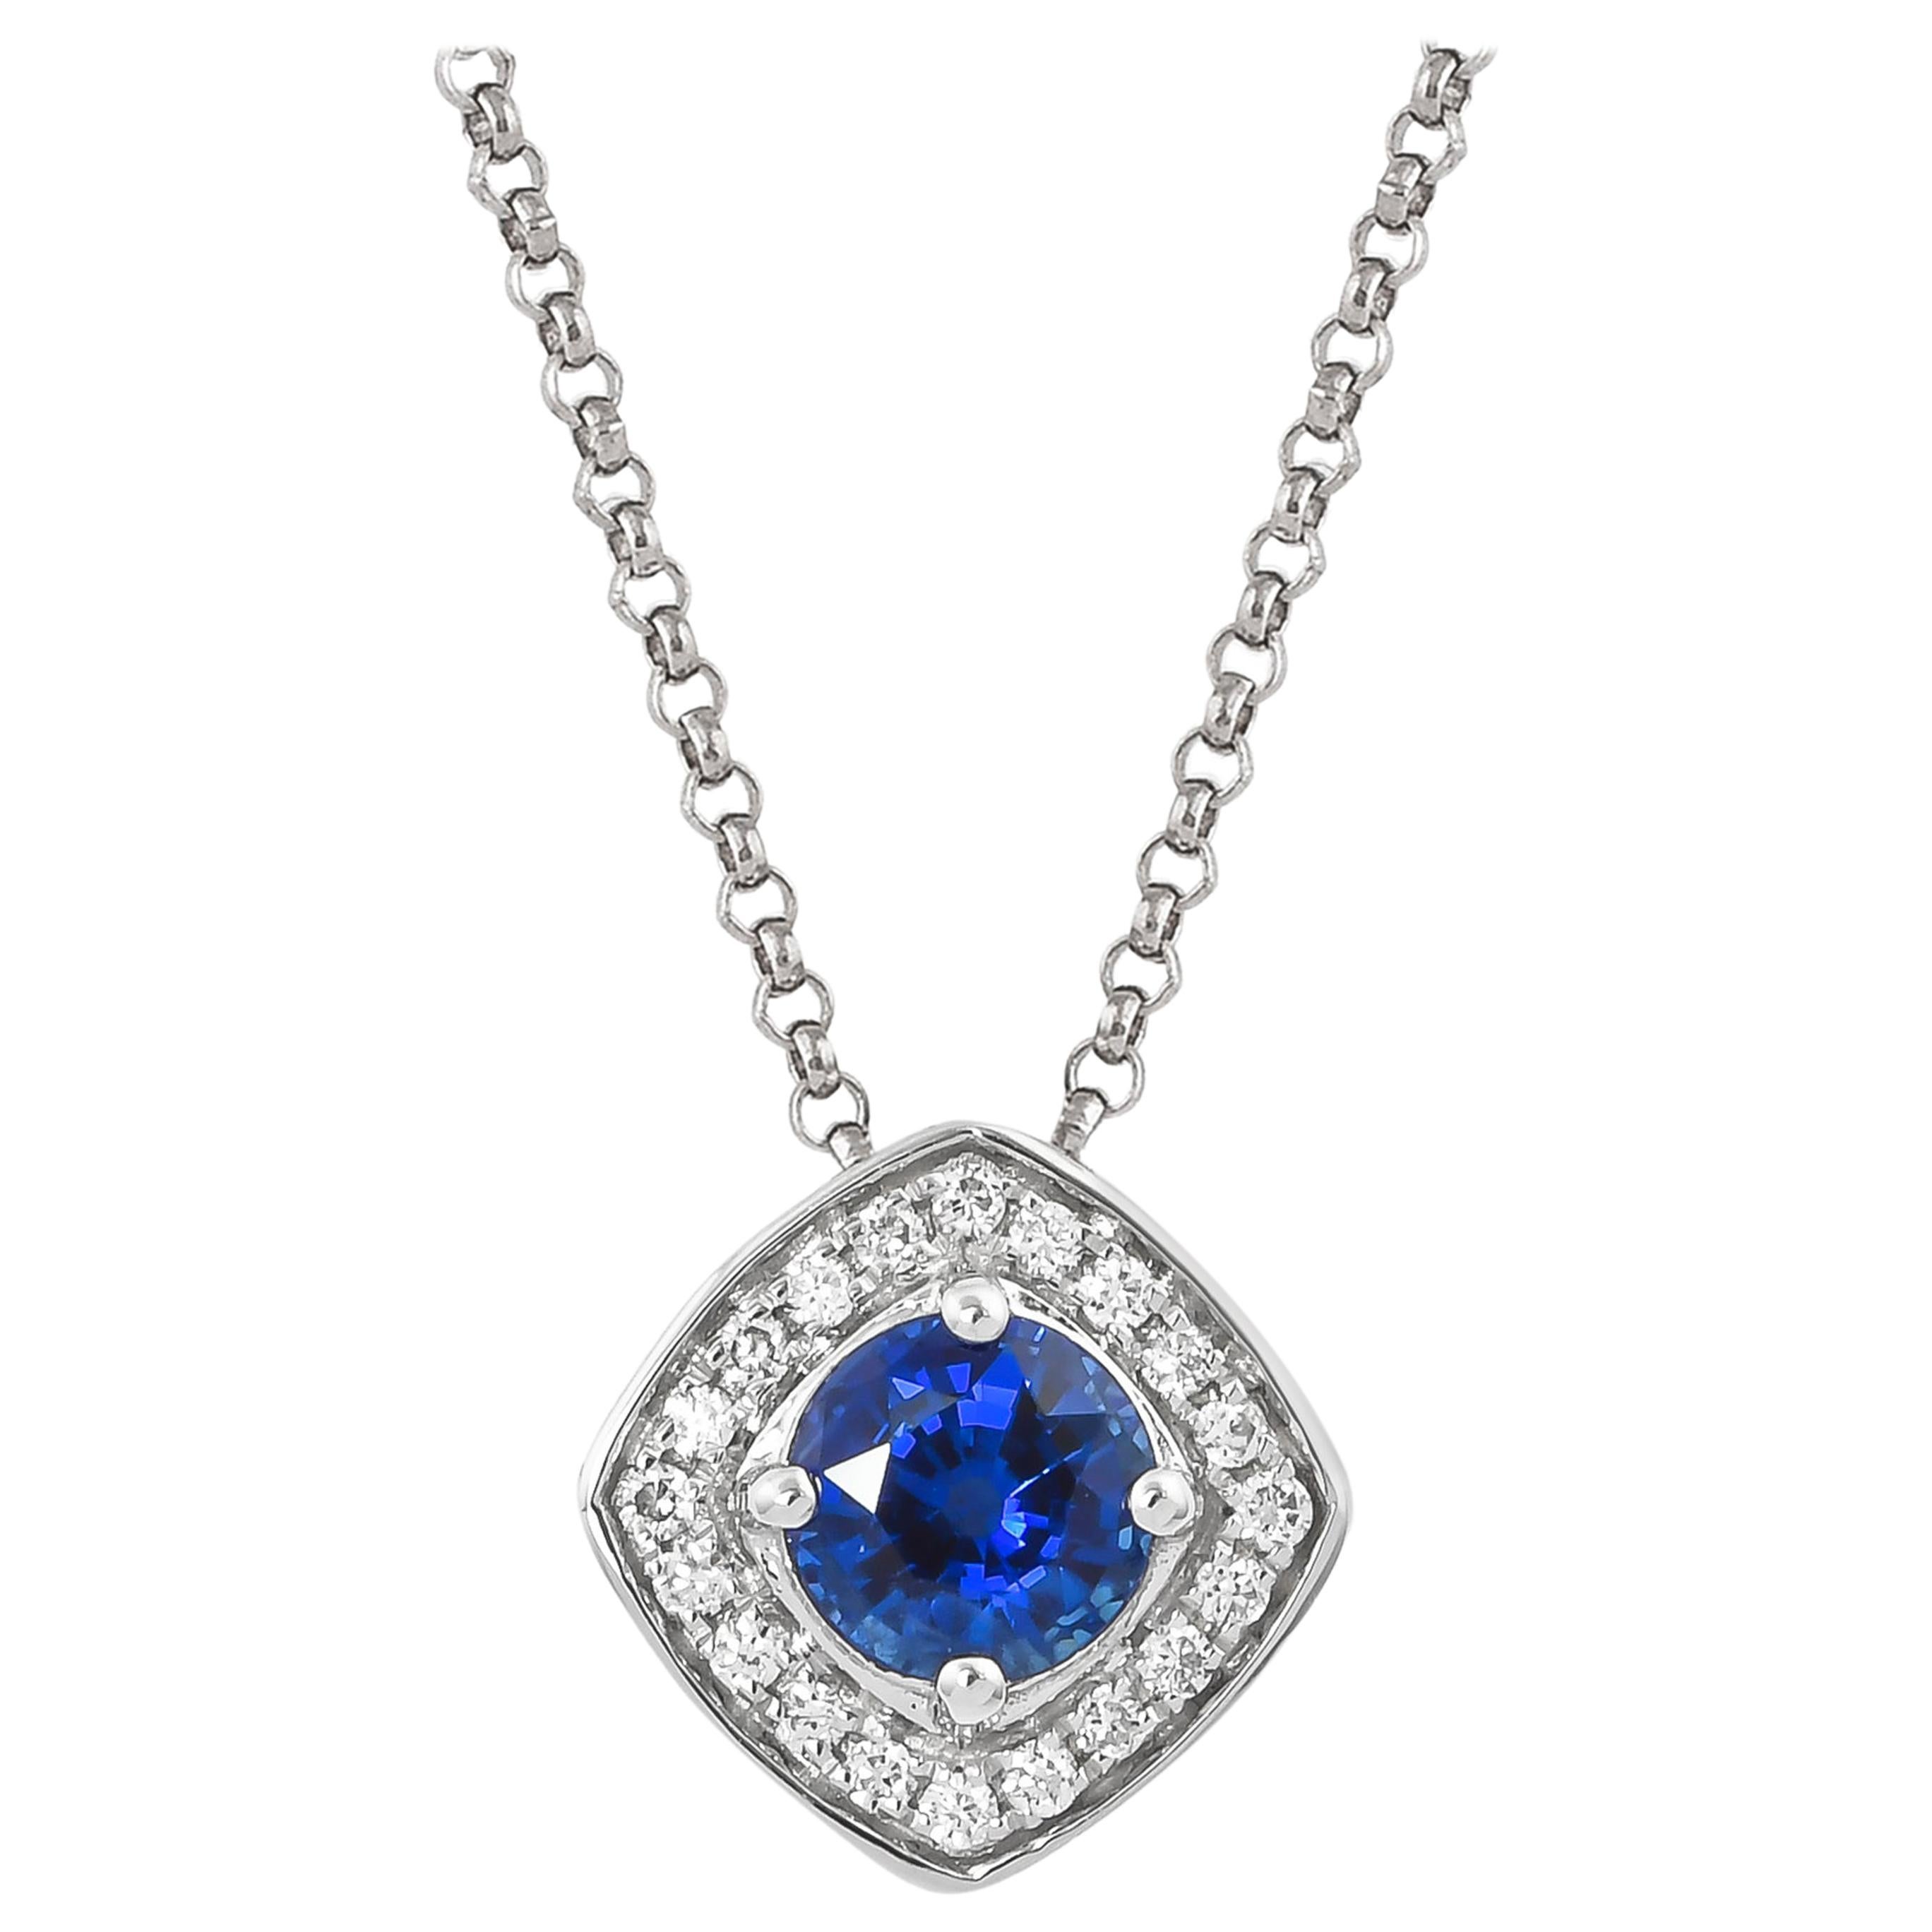 Pendentif en or blanc 18 carats avec chaîne en diamants et saphir bleu de 0,5 carat